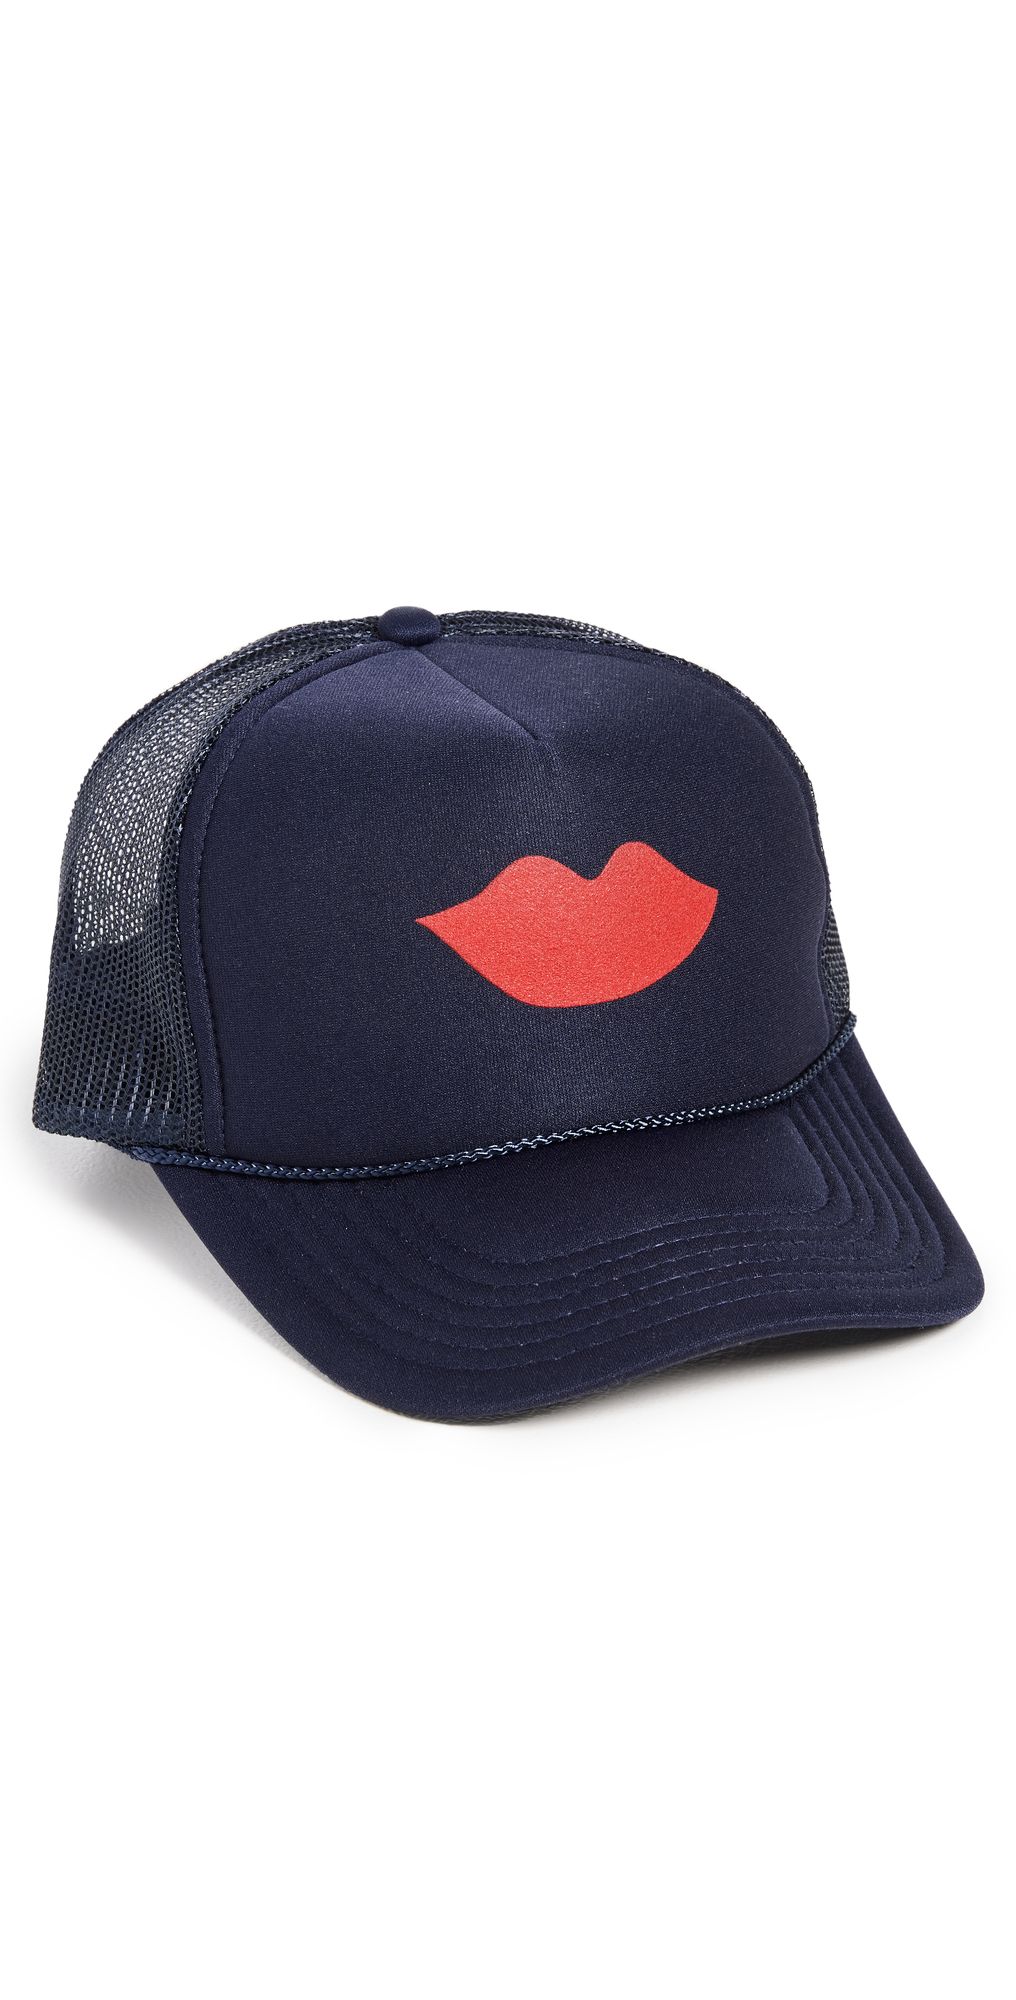 Clare V. Trucker Hat | SHOPBOP | Shopbop